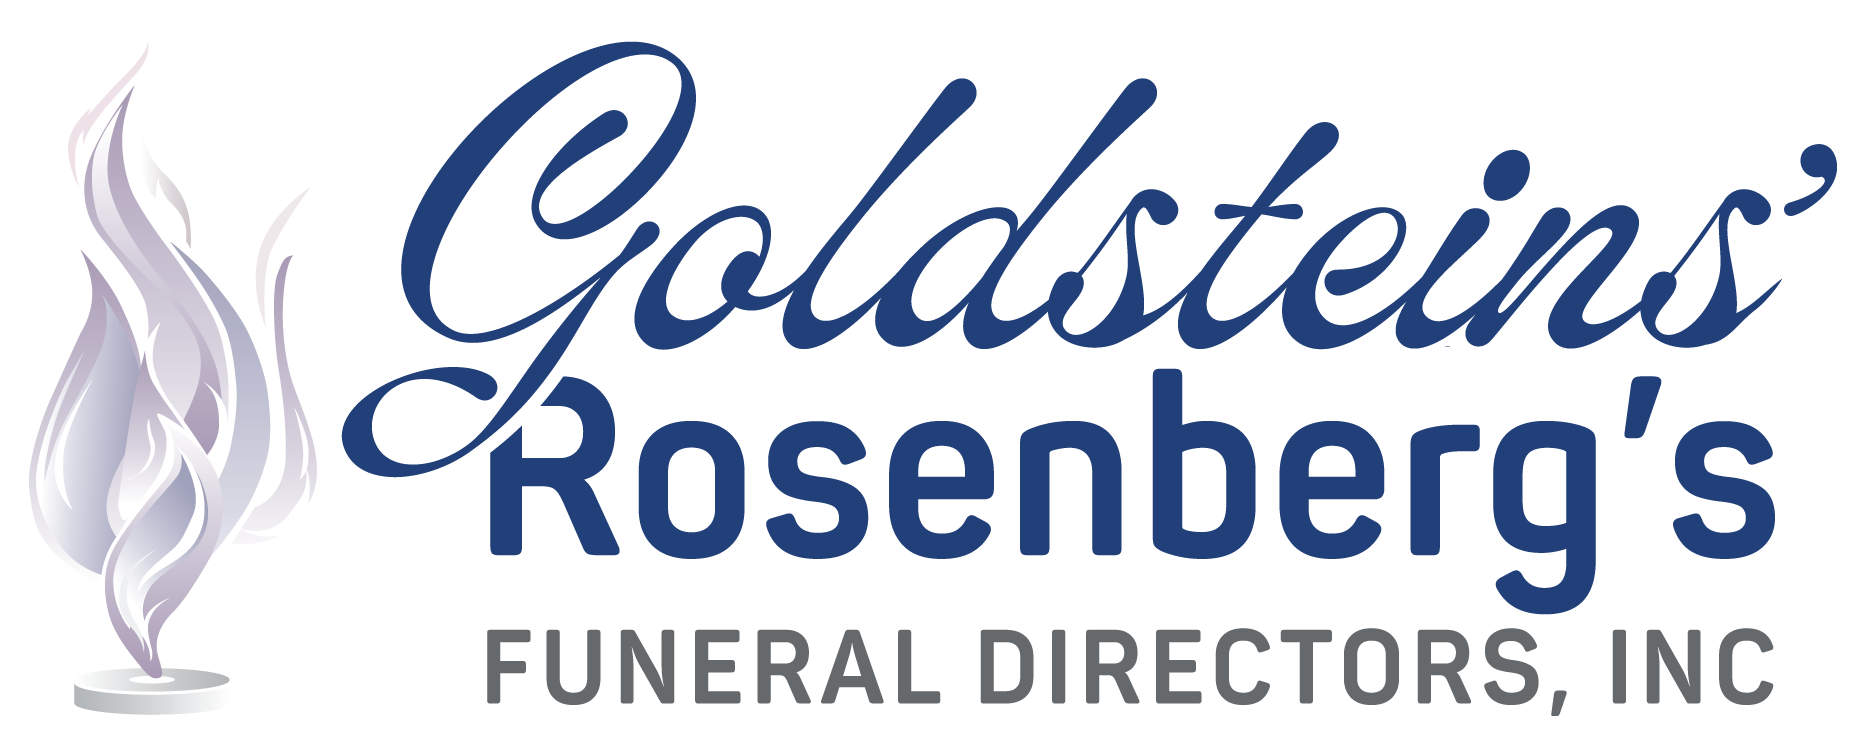 Goldstein's Rosenberg's Funeral Directors